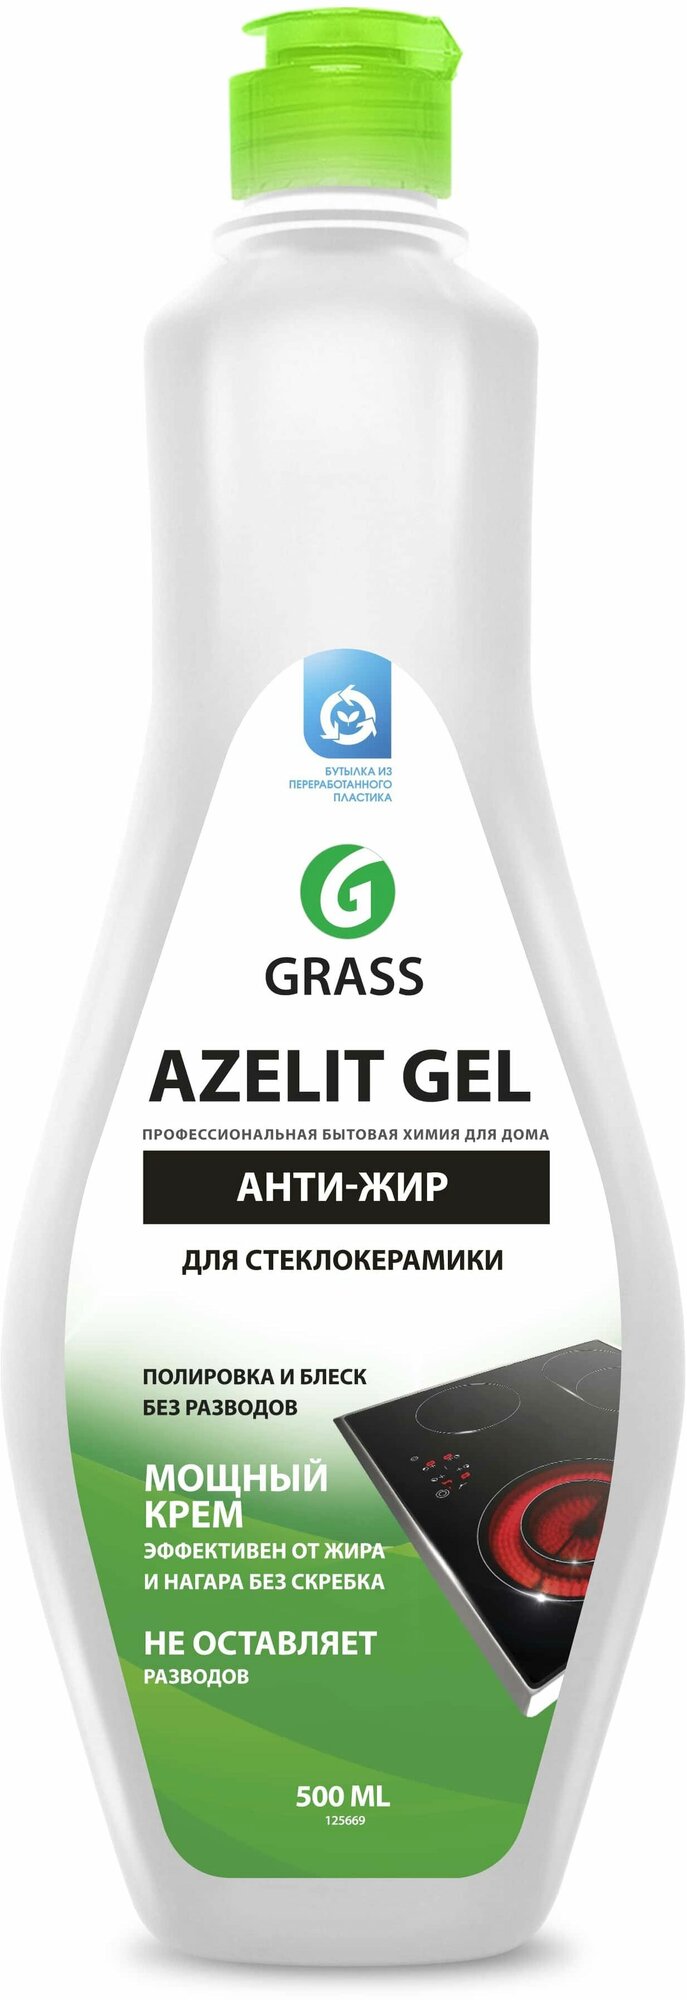 GRASS Чистящее средство Azelit gel для стеклокерамики, 500 мл